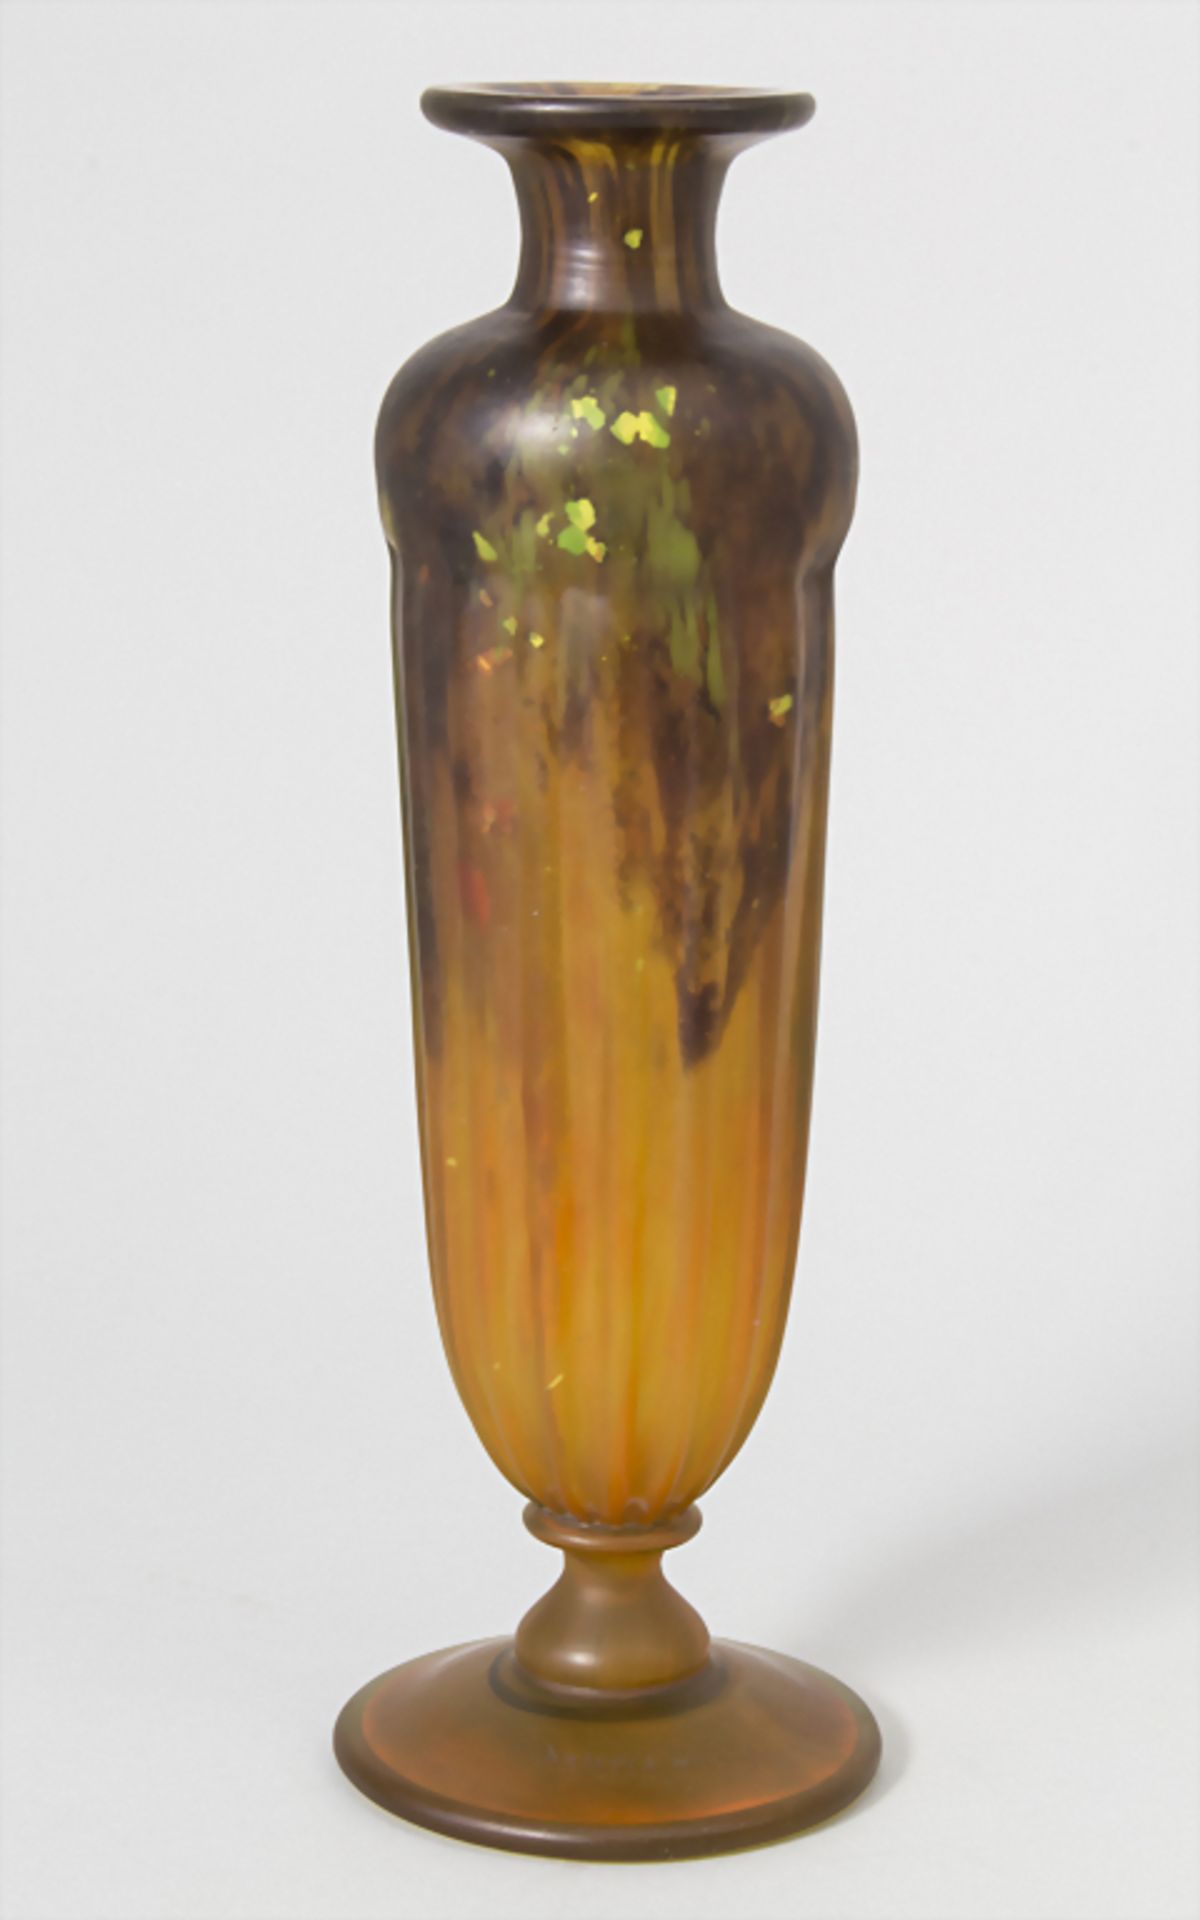 Jugendstil Vase / Art Nouveau glass vase, Daum Frères, Ecole de Nancy, Frankreich, um 1900< - Image 2 of 7